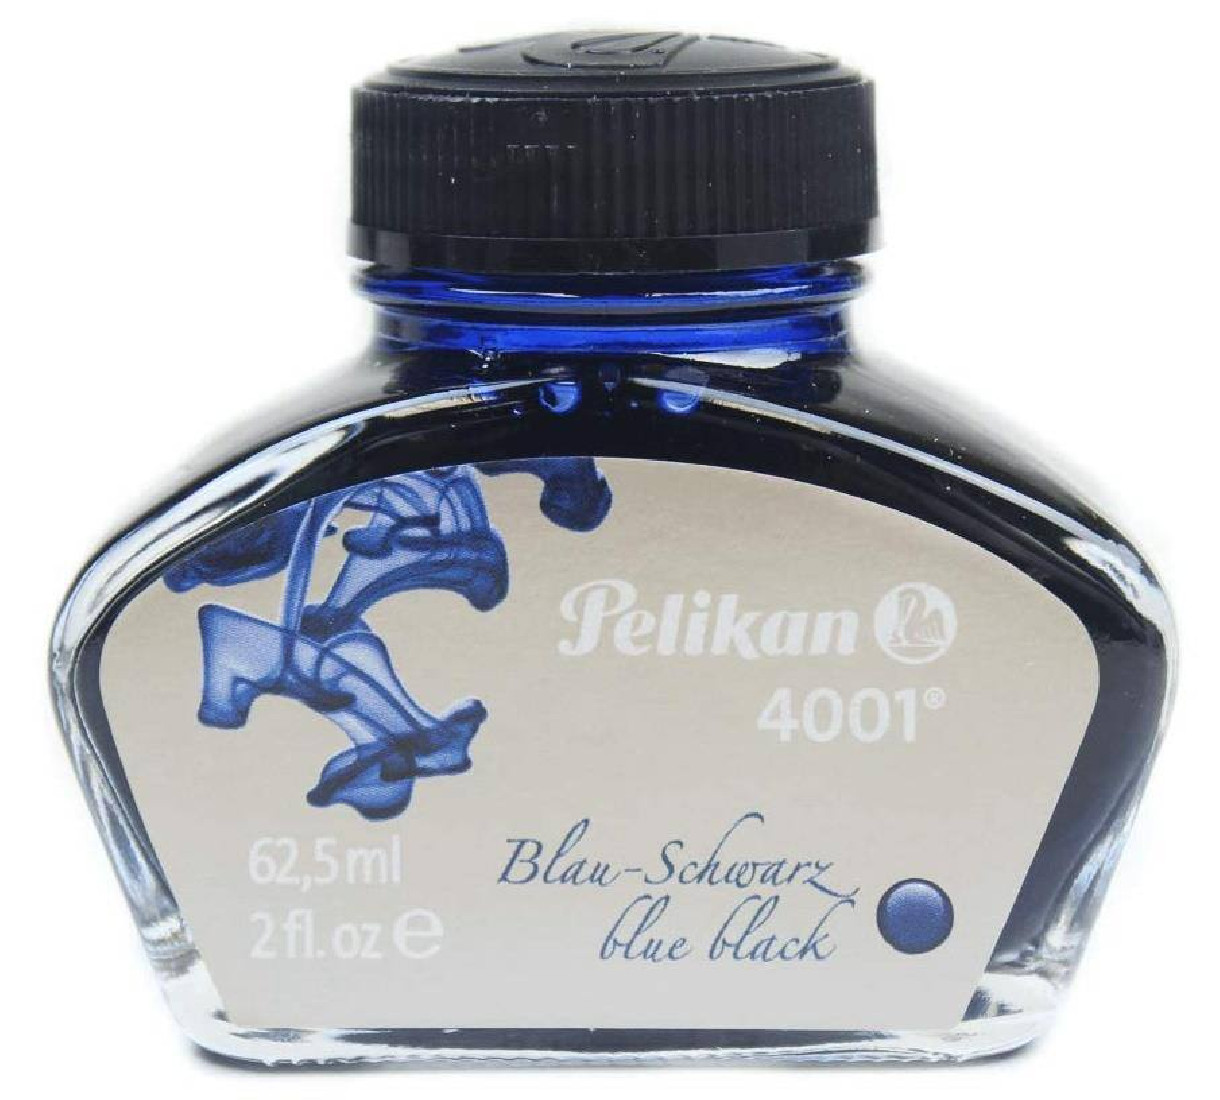 Pelikan 4001 Blue Black 62,5ml  Fountain pen ink